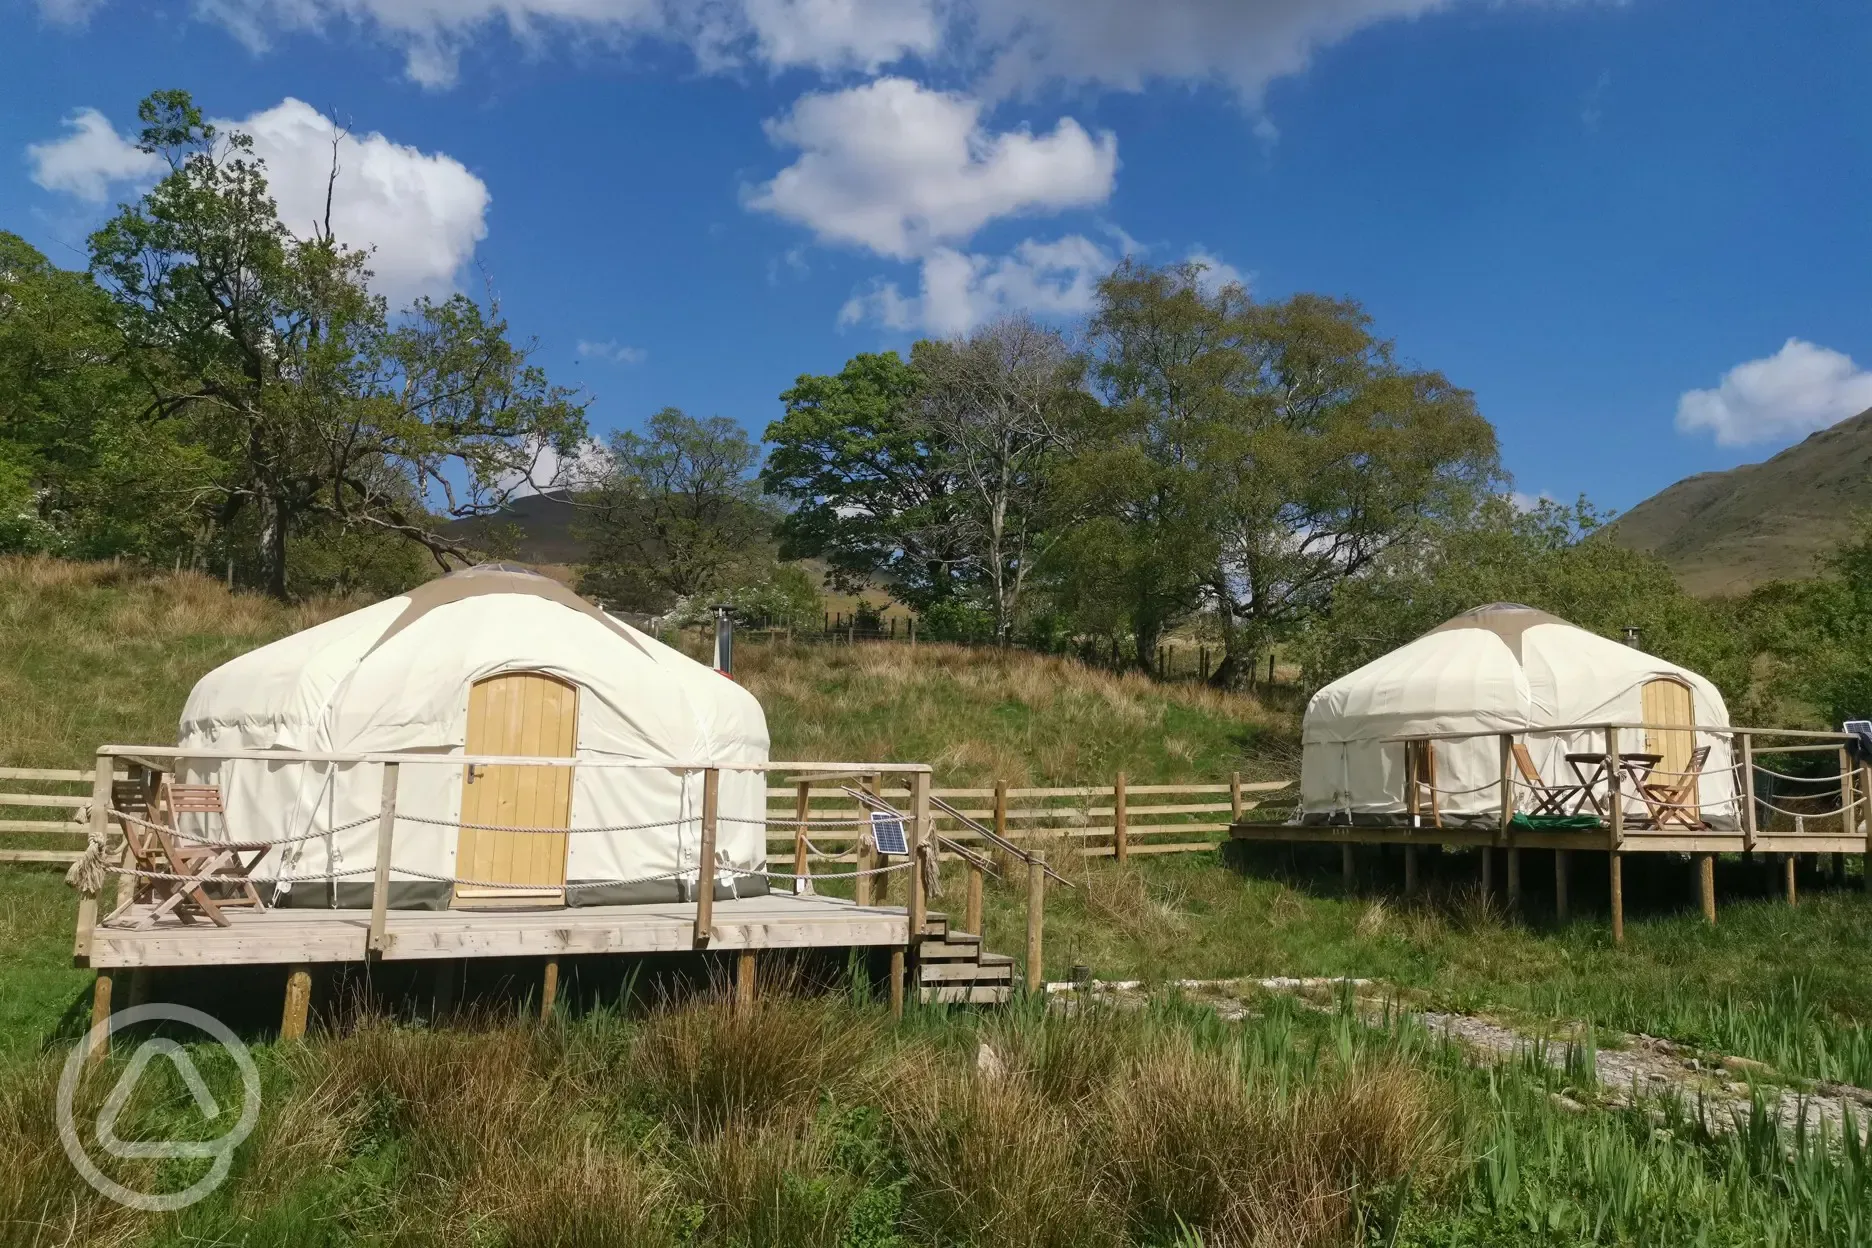 Syke Farm Campsite - Yurts